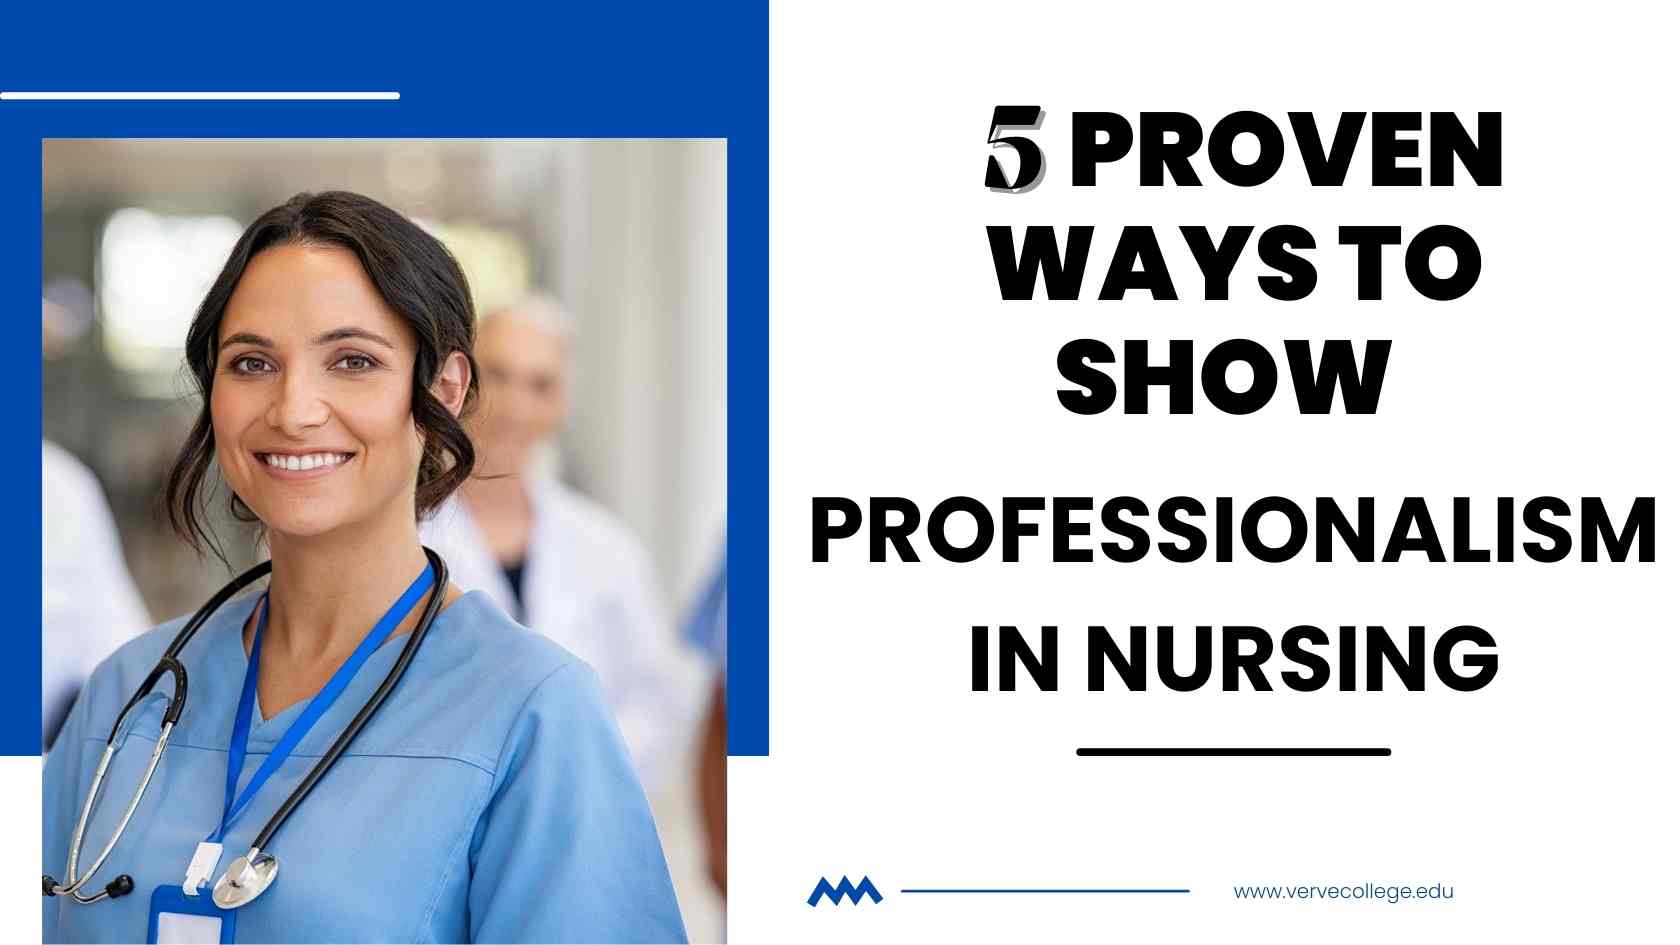 5 Proven Ways to Show Professionalism in Nursing